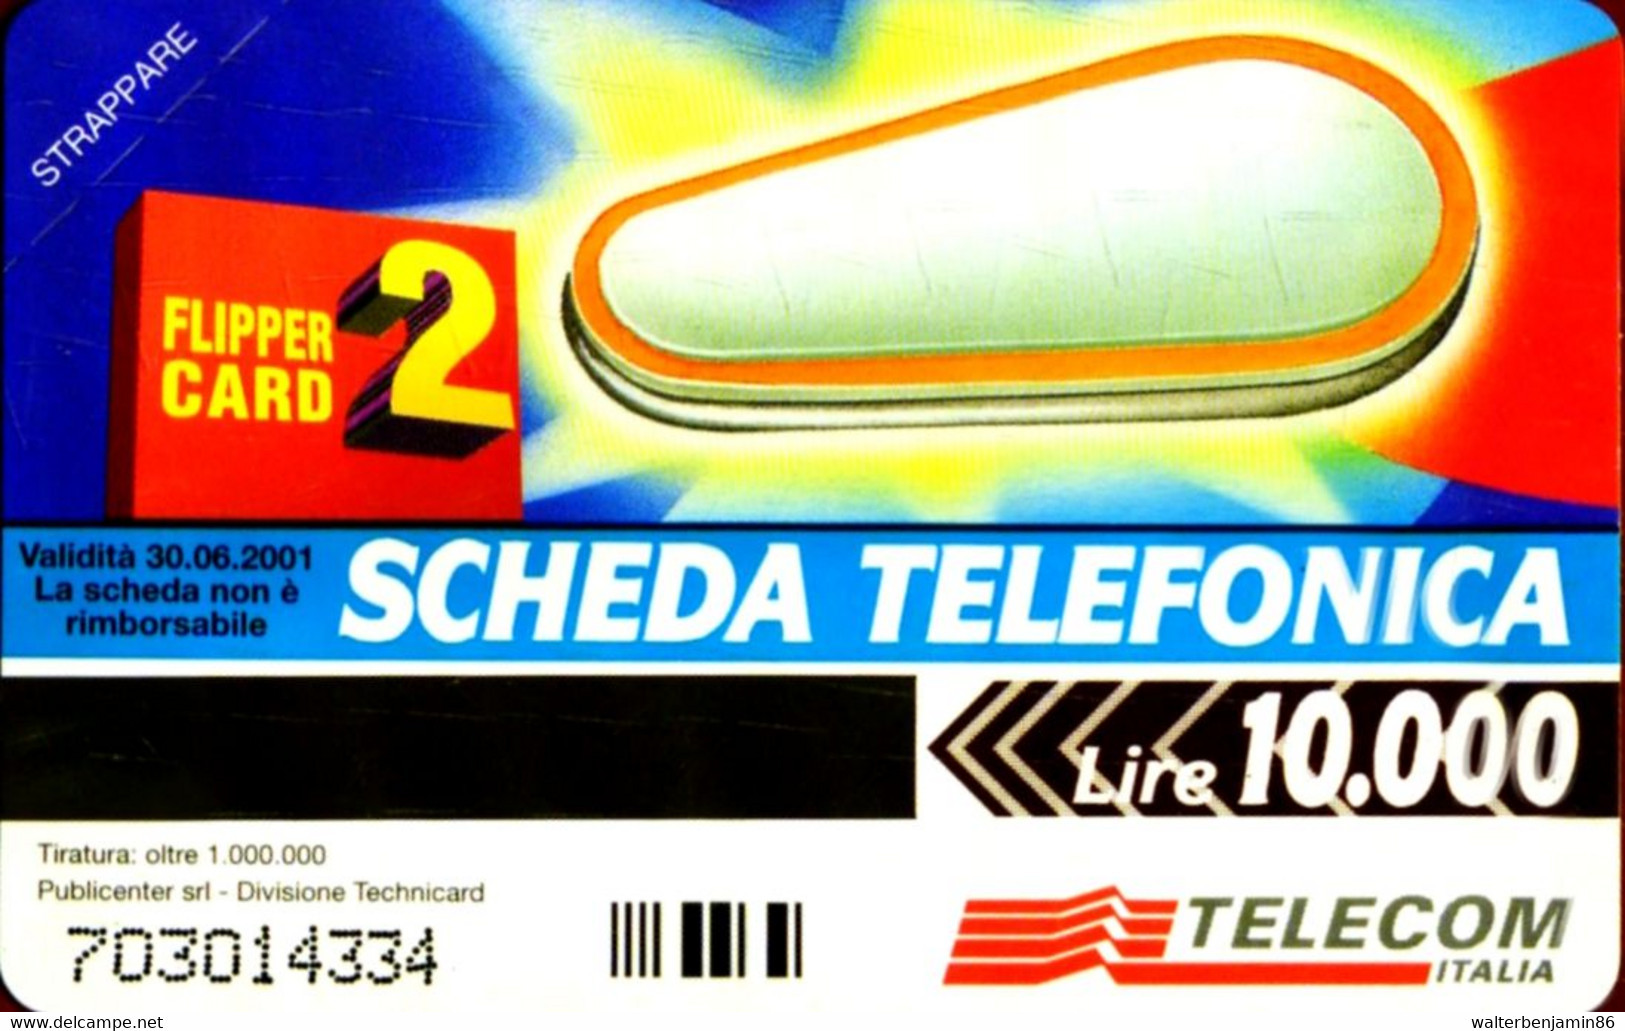 G 1007 C&C 3079 SCHEDA TELEFONICA NUOVA MAGNETIZZATA FLIPPER BONUS - Publiques Publicitaires